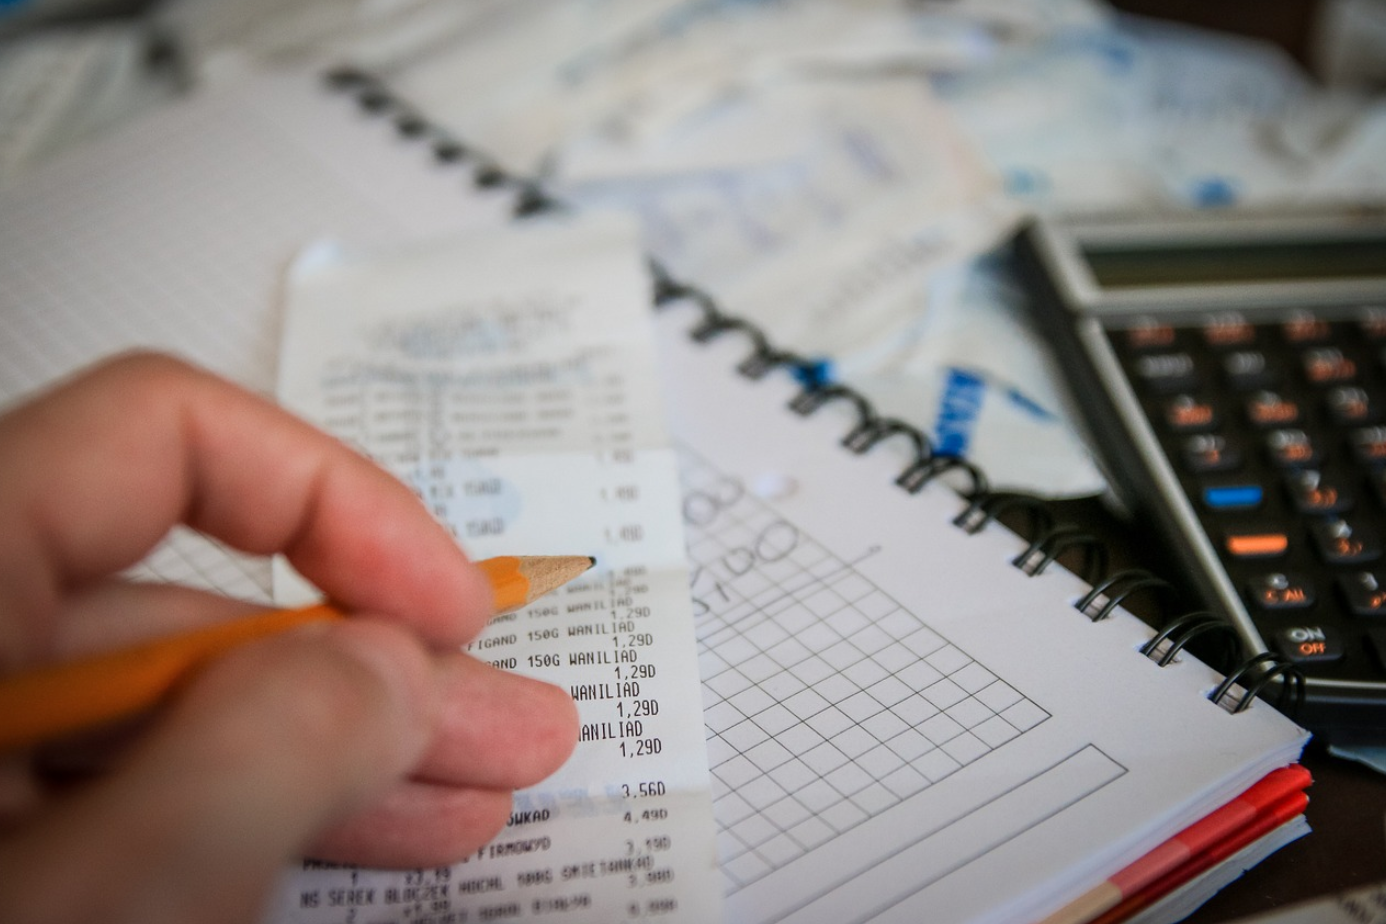 Calculator, receipt, notebook near person with pencil; image by Jarmoluk, via Pixabay.com.